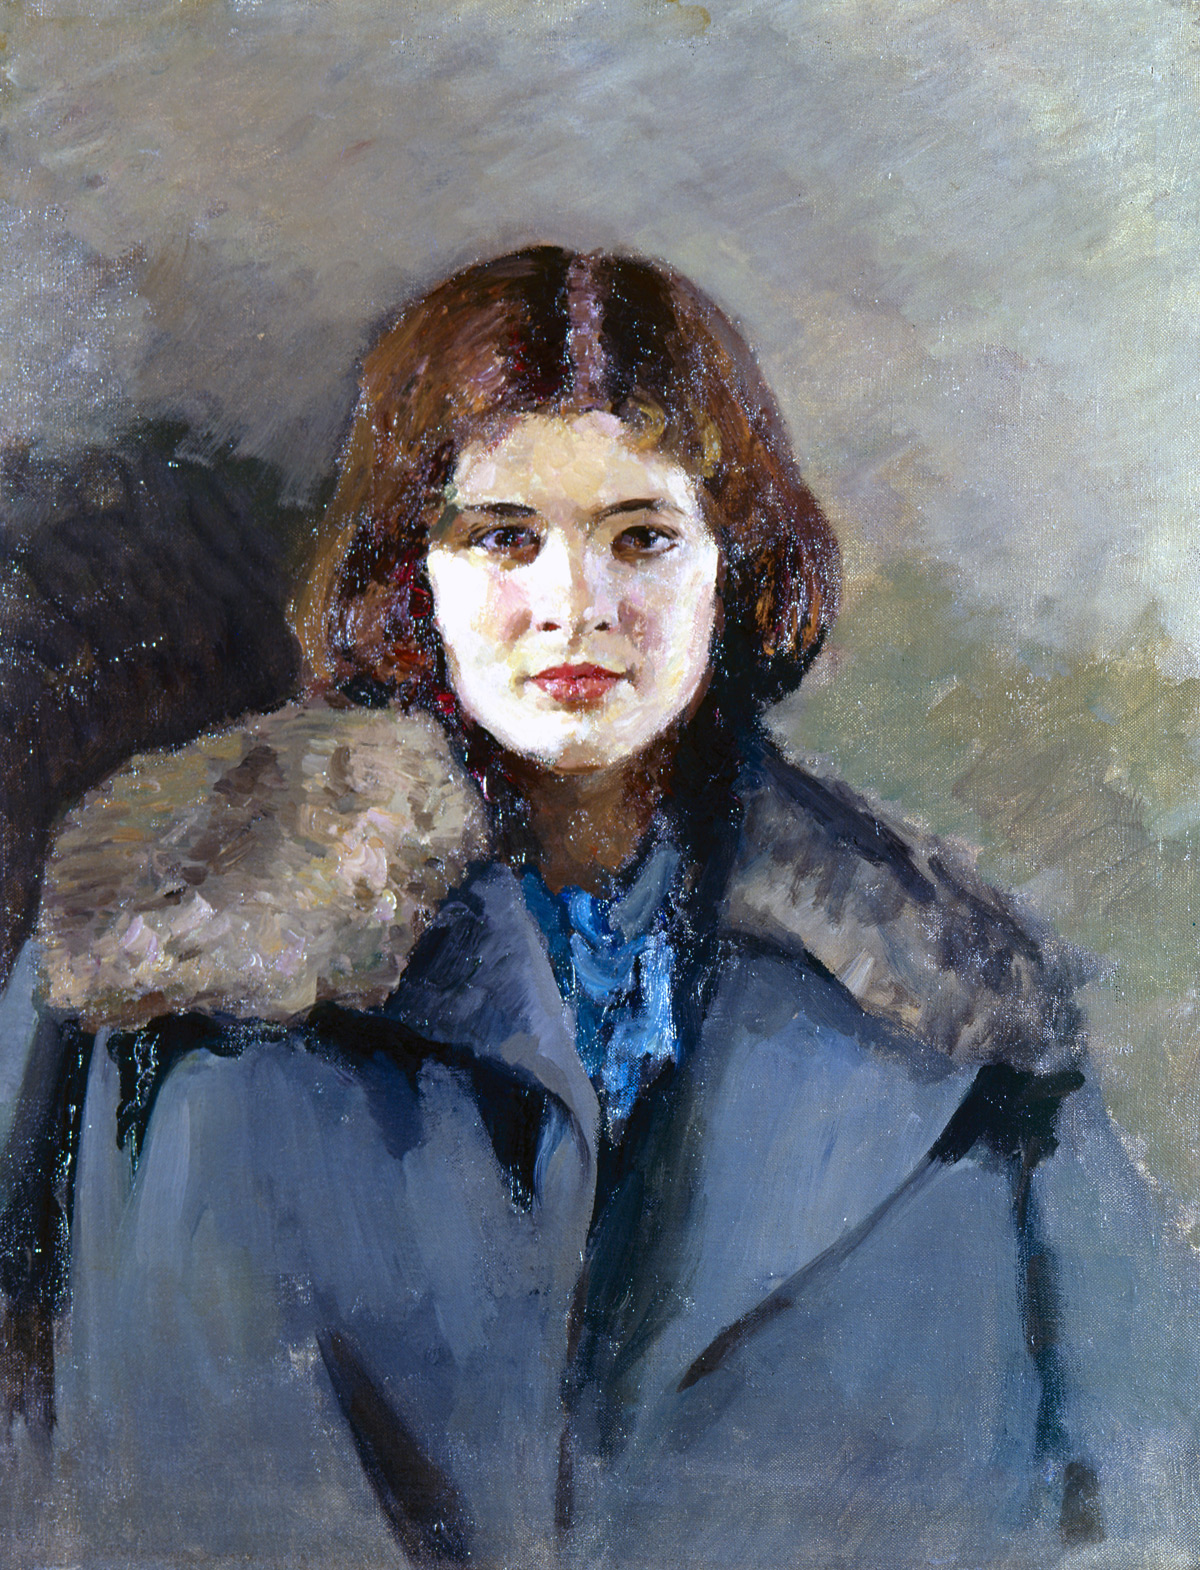 Reproduction of "Svetlana" painting by artist Igor Grabar, 1933. / RIA Novosti